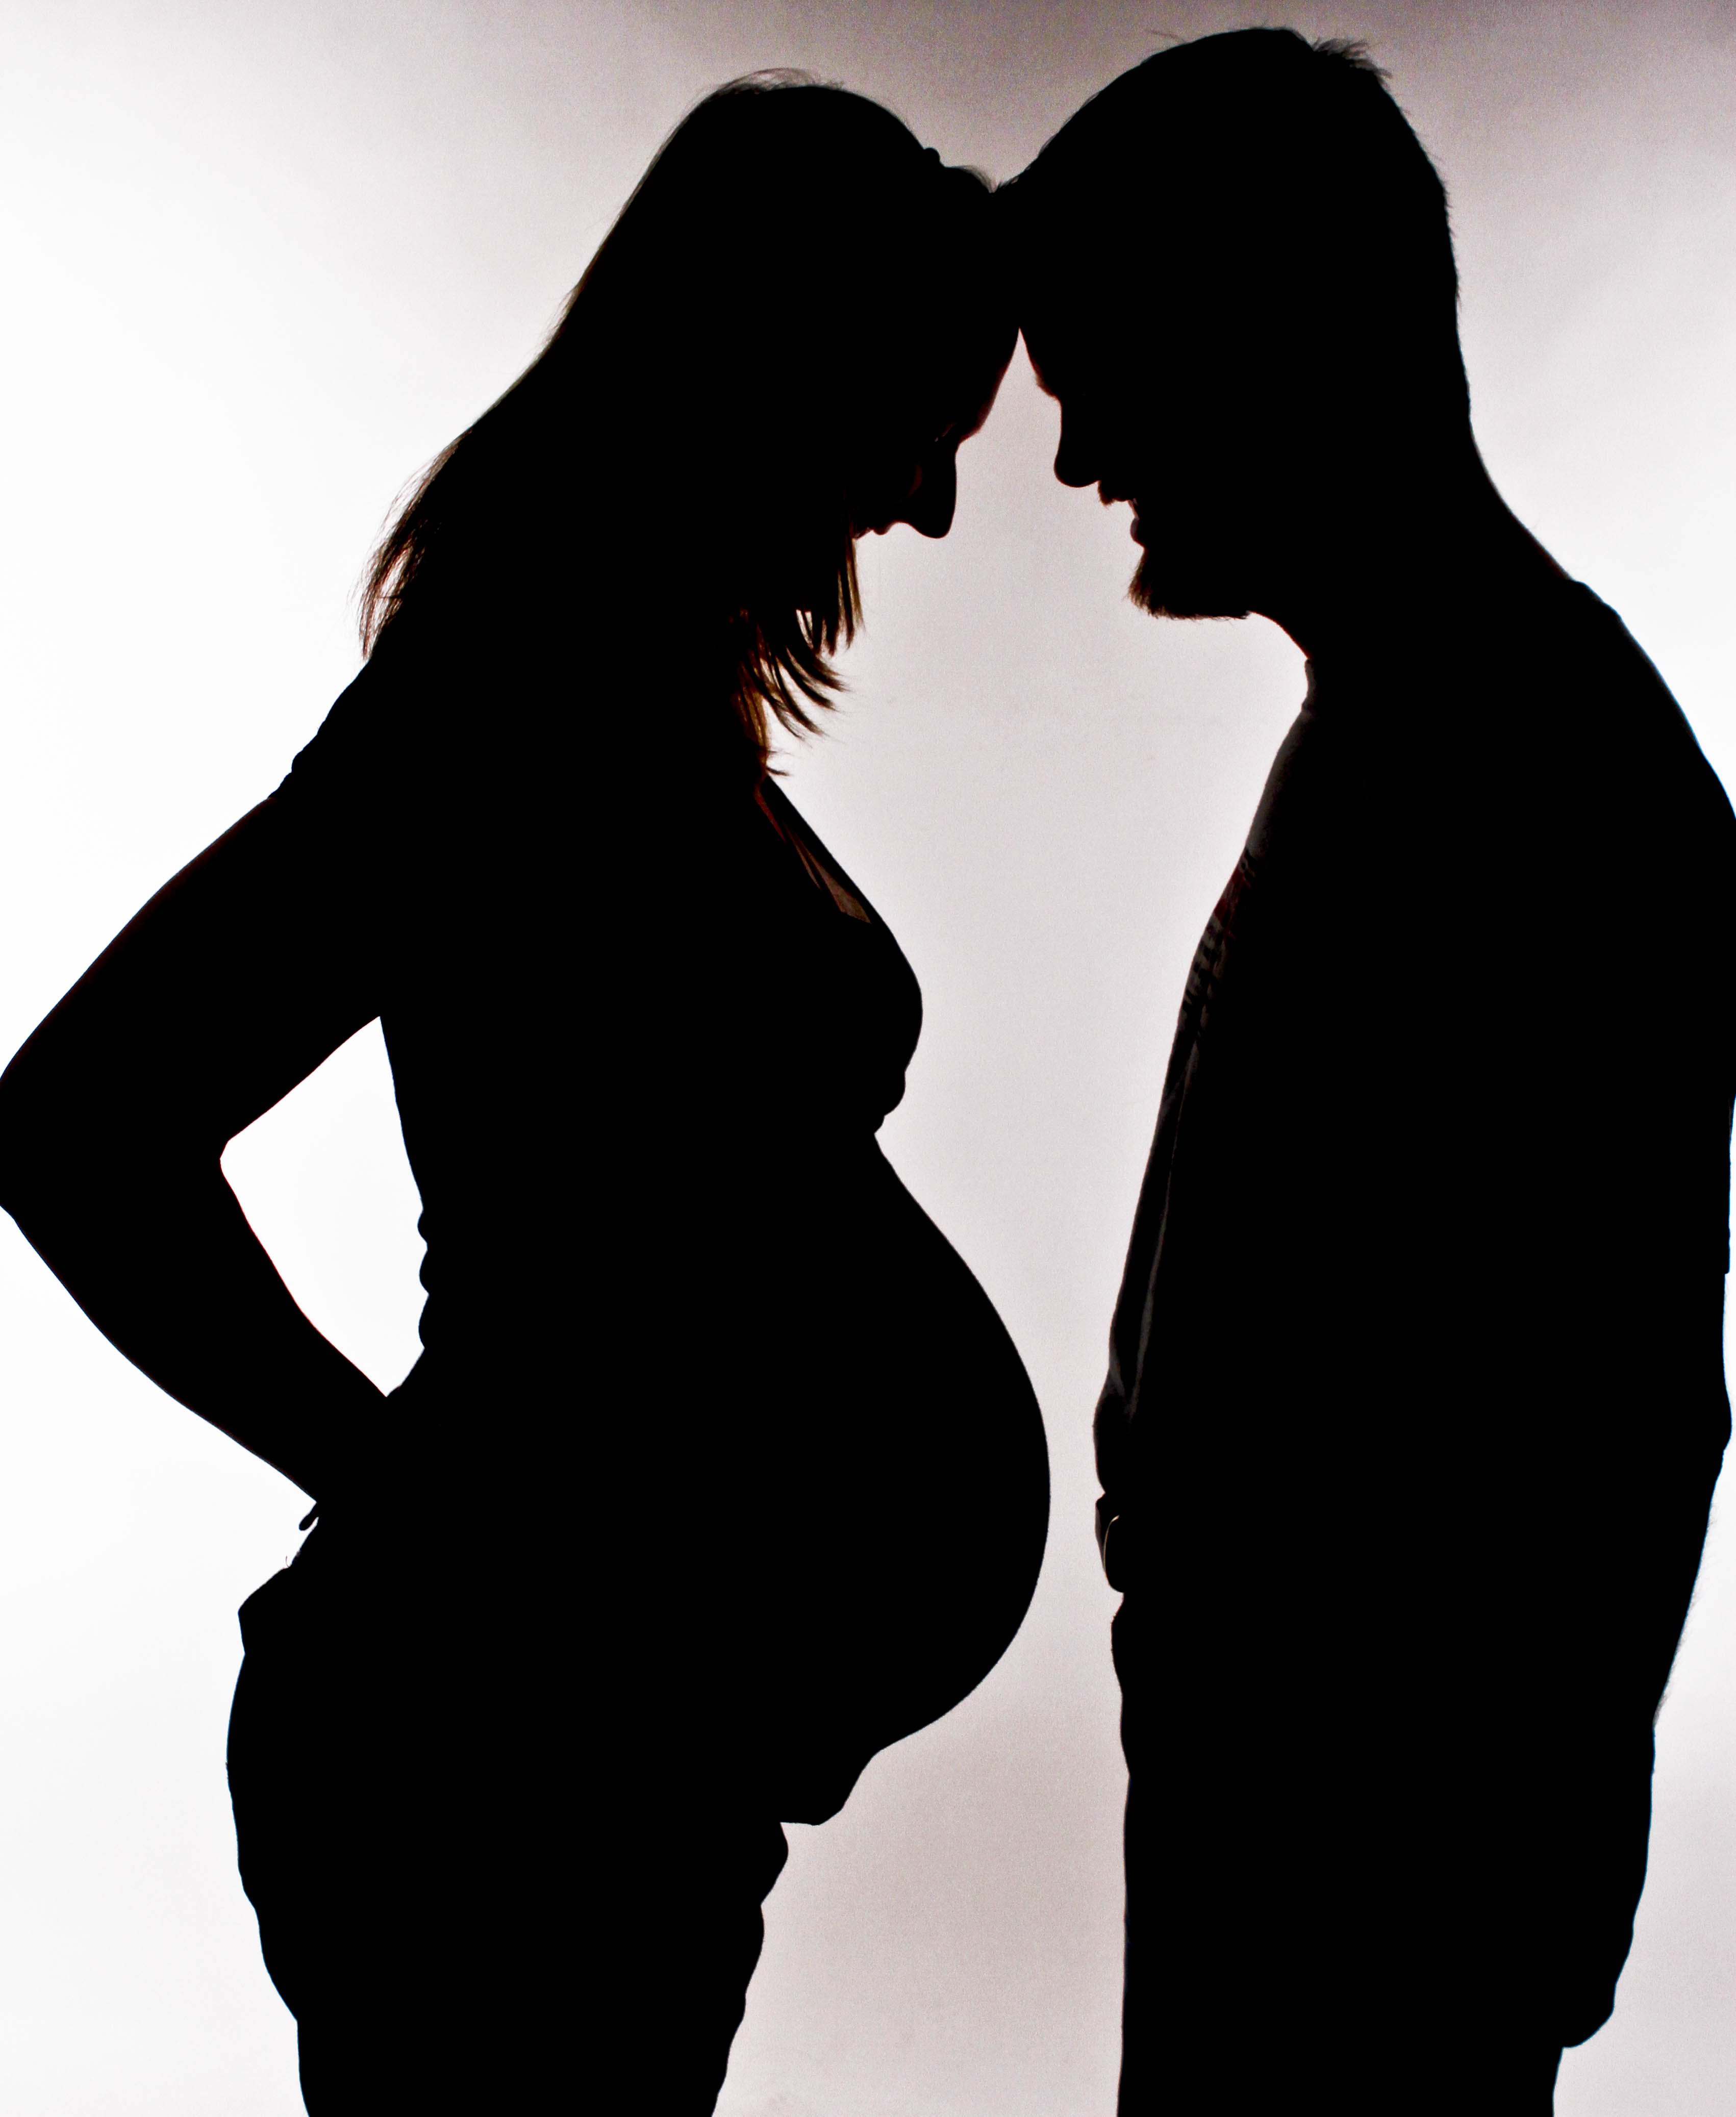 A pregnant woman's silhouette